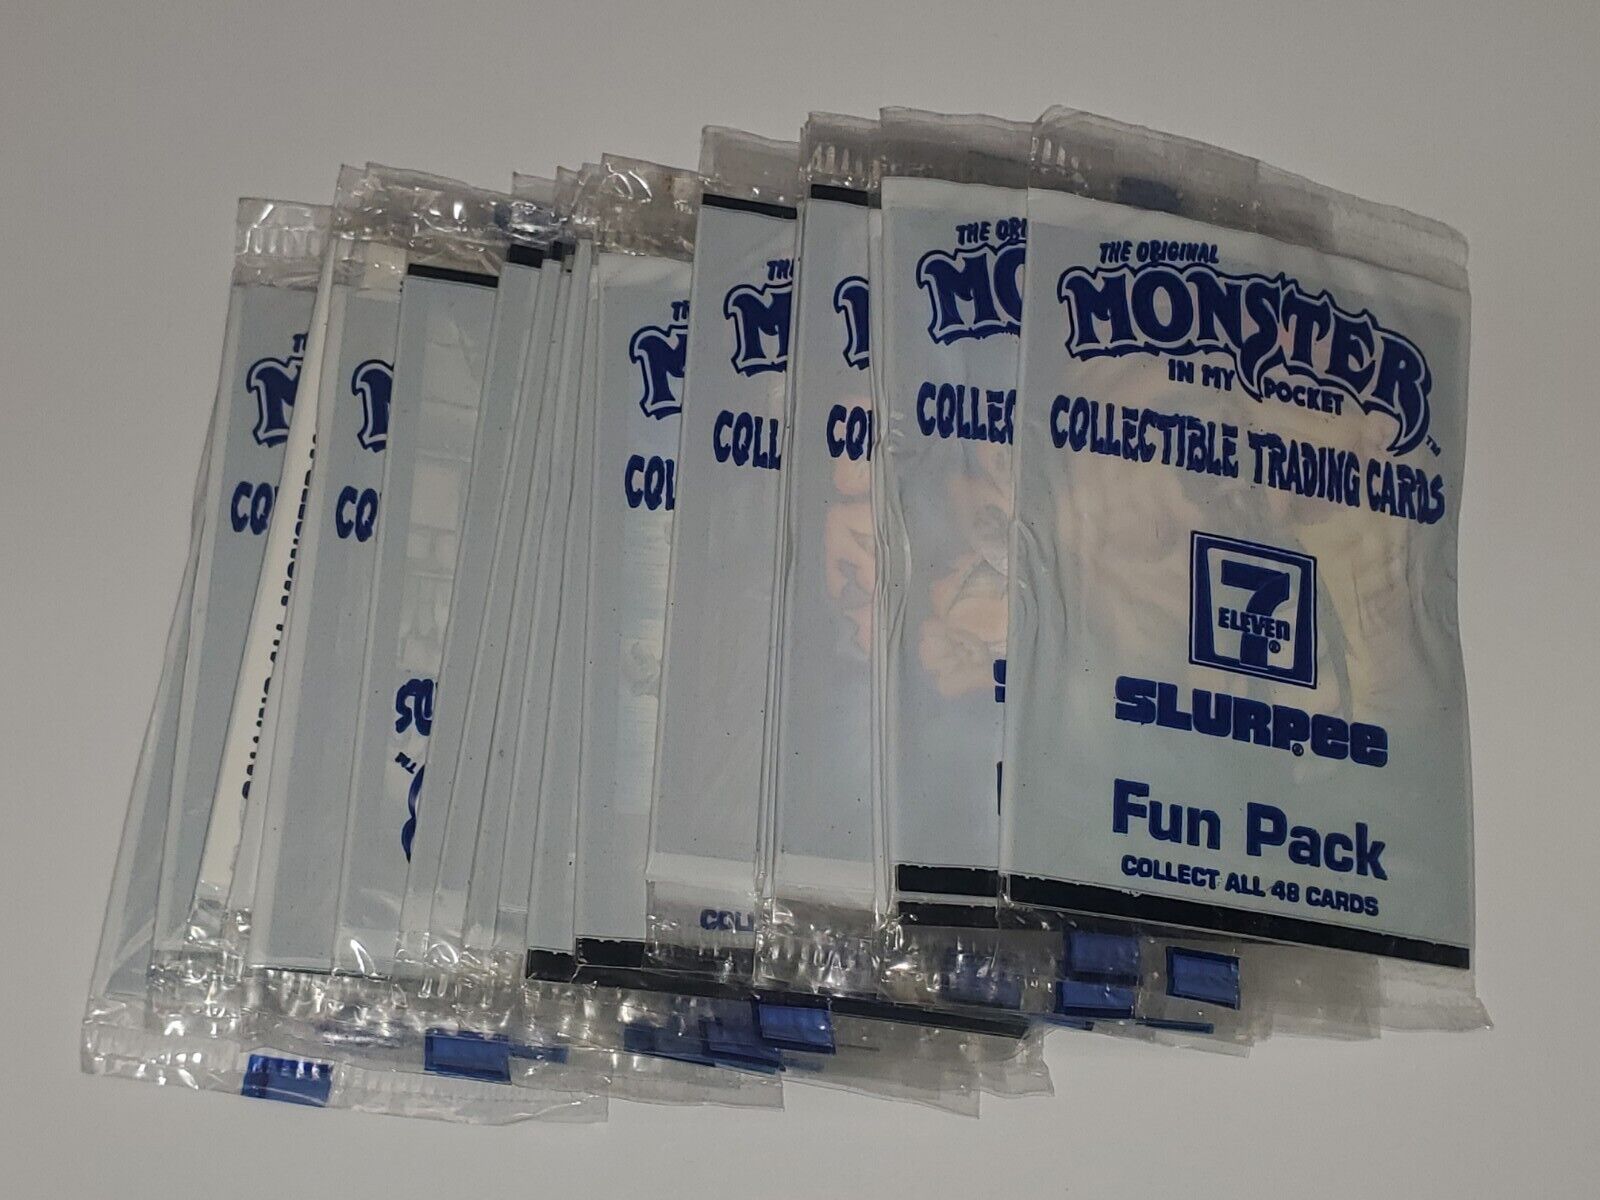 25 new & sealed 1991 Monster In My Pocket card packs. 7-Eleven Slurpee. 7-11